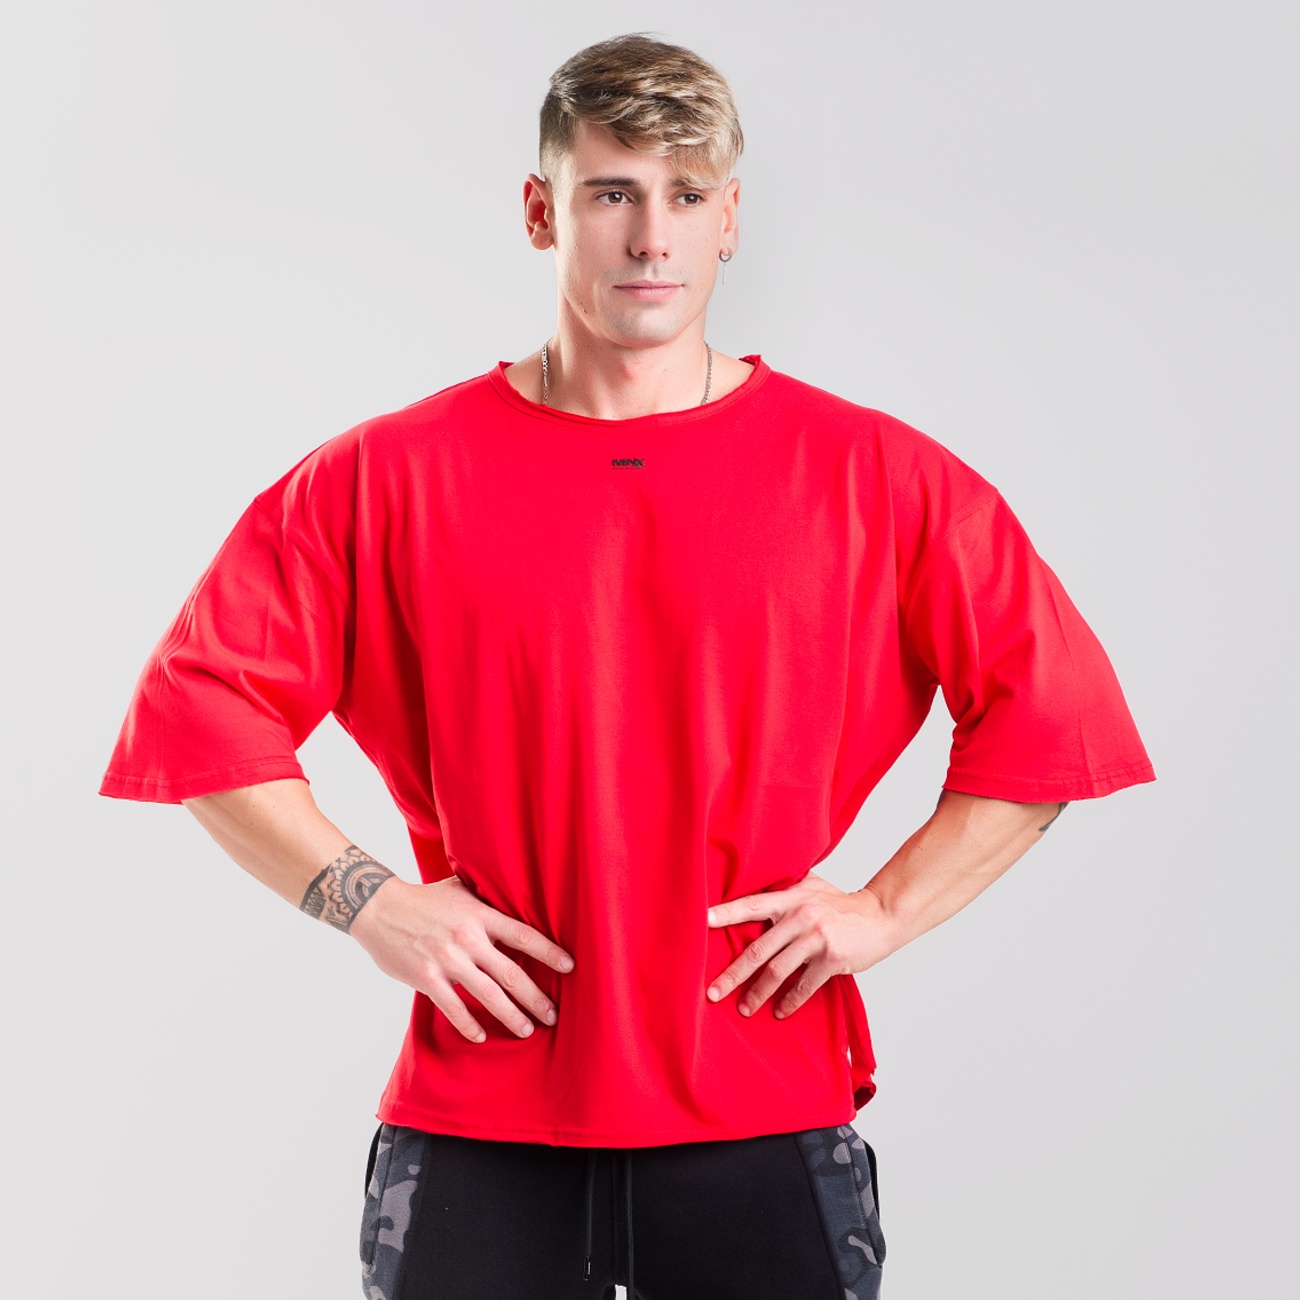 MNX Extra T-shirt basique, rouge vif